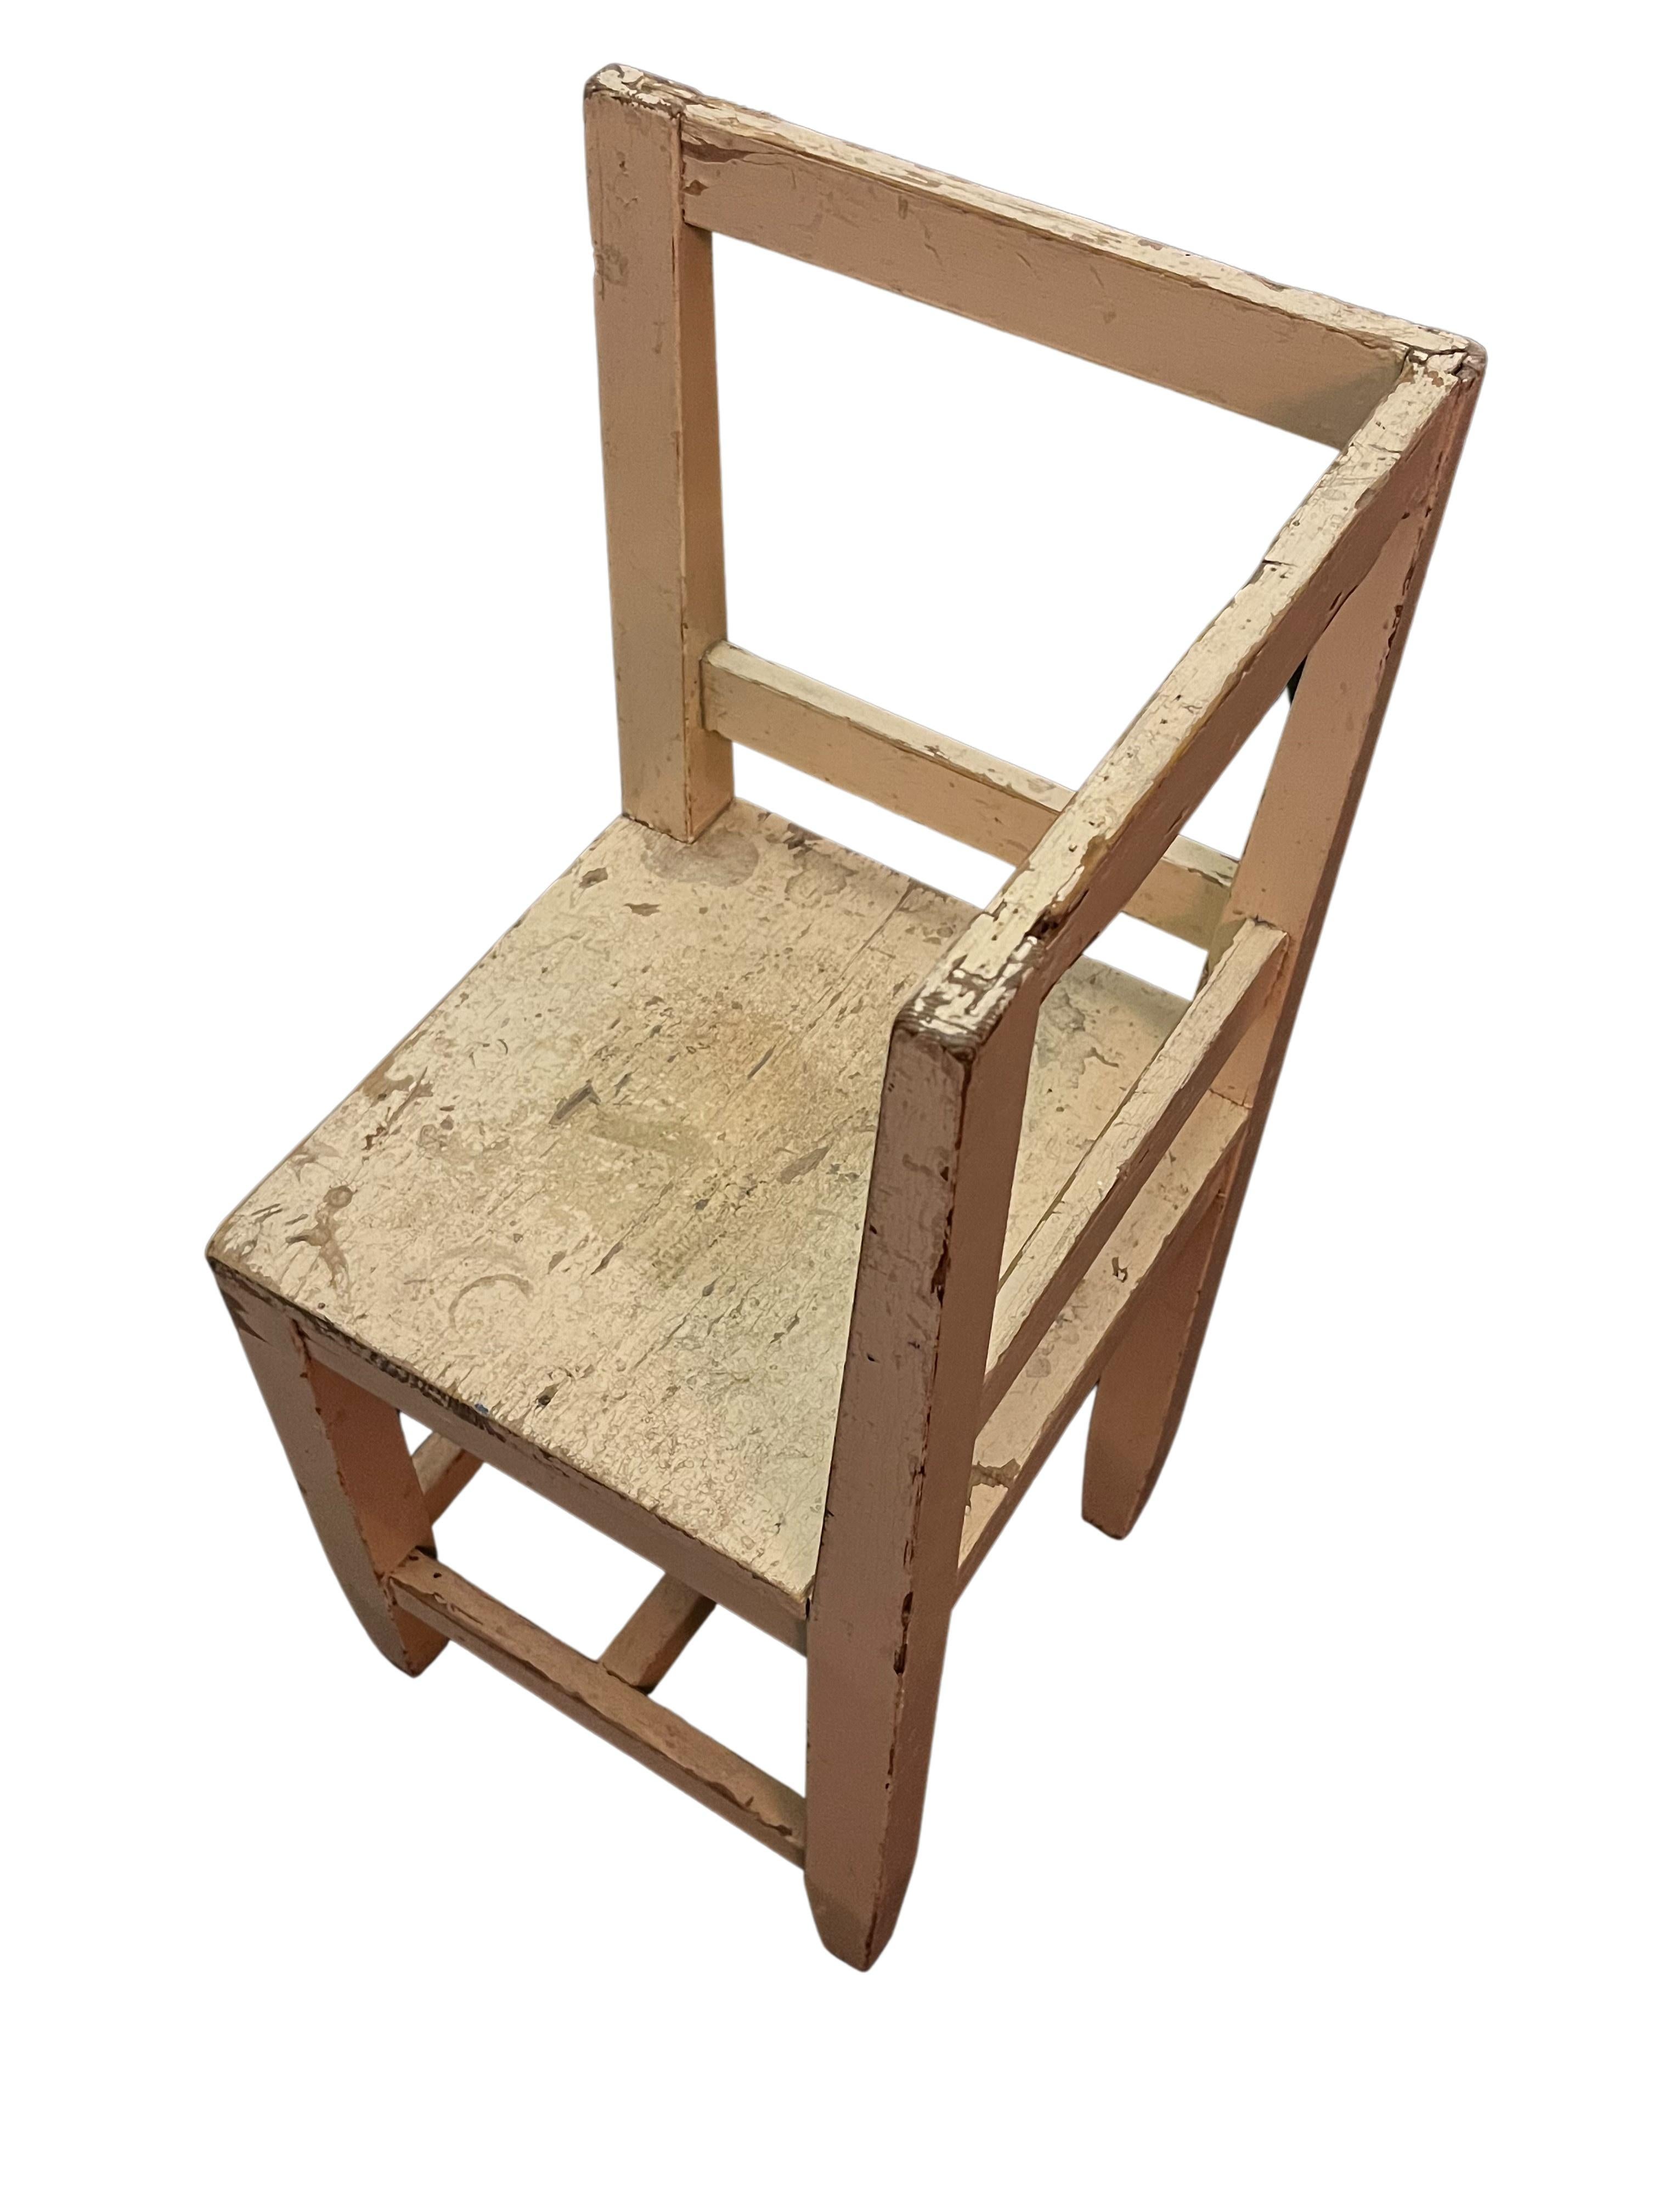 Painted Werkbund chair stool, original condition, Museum piece, Art Deco, 1920s, Germany For Sale